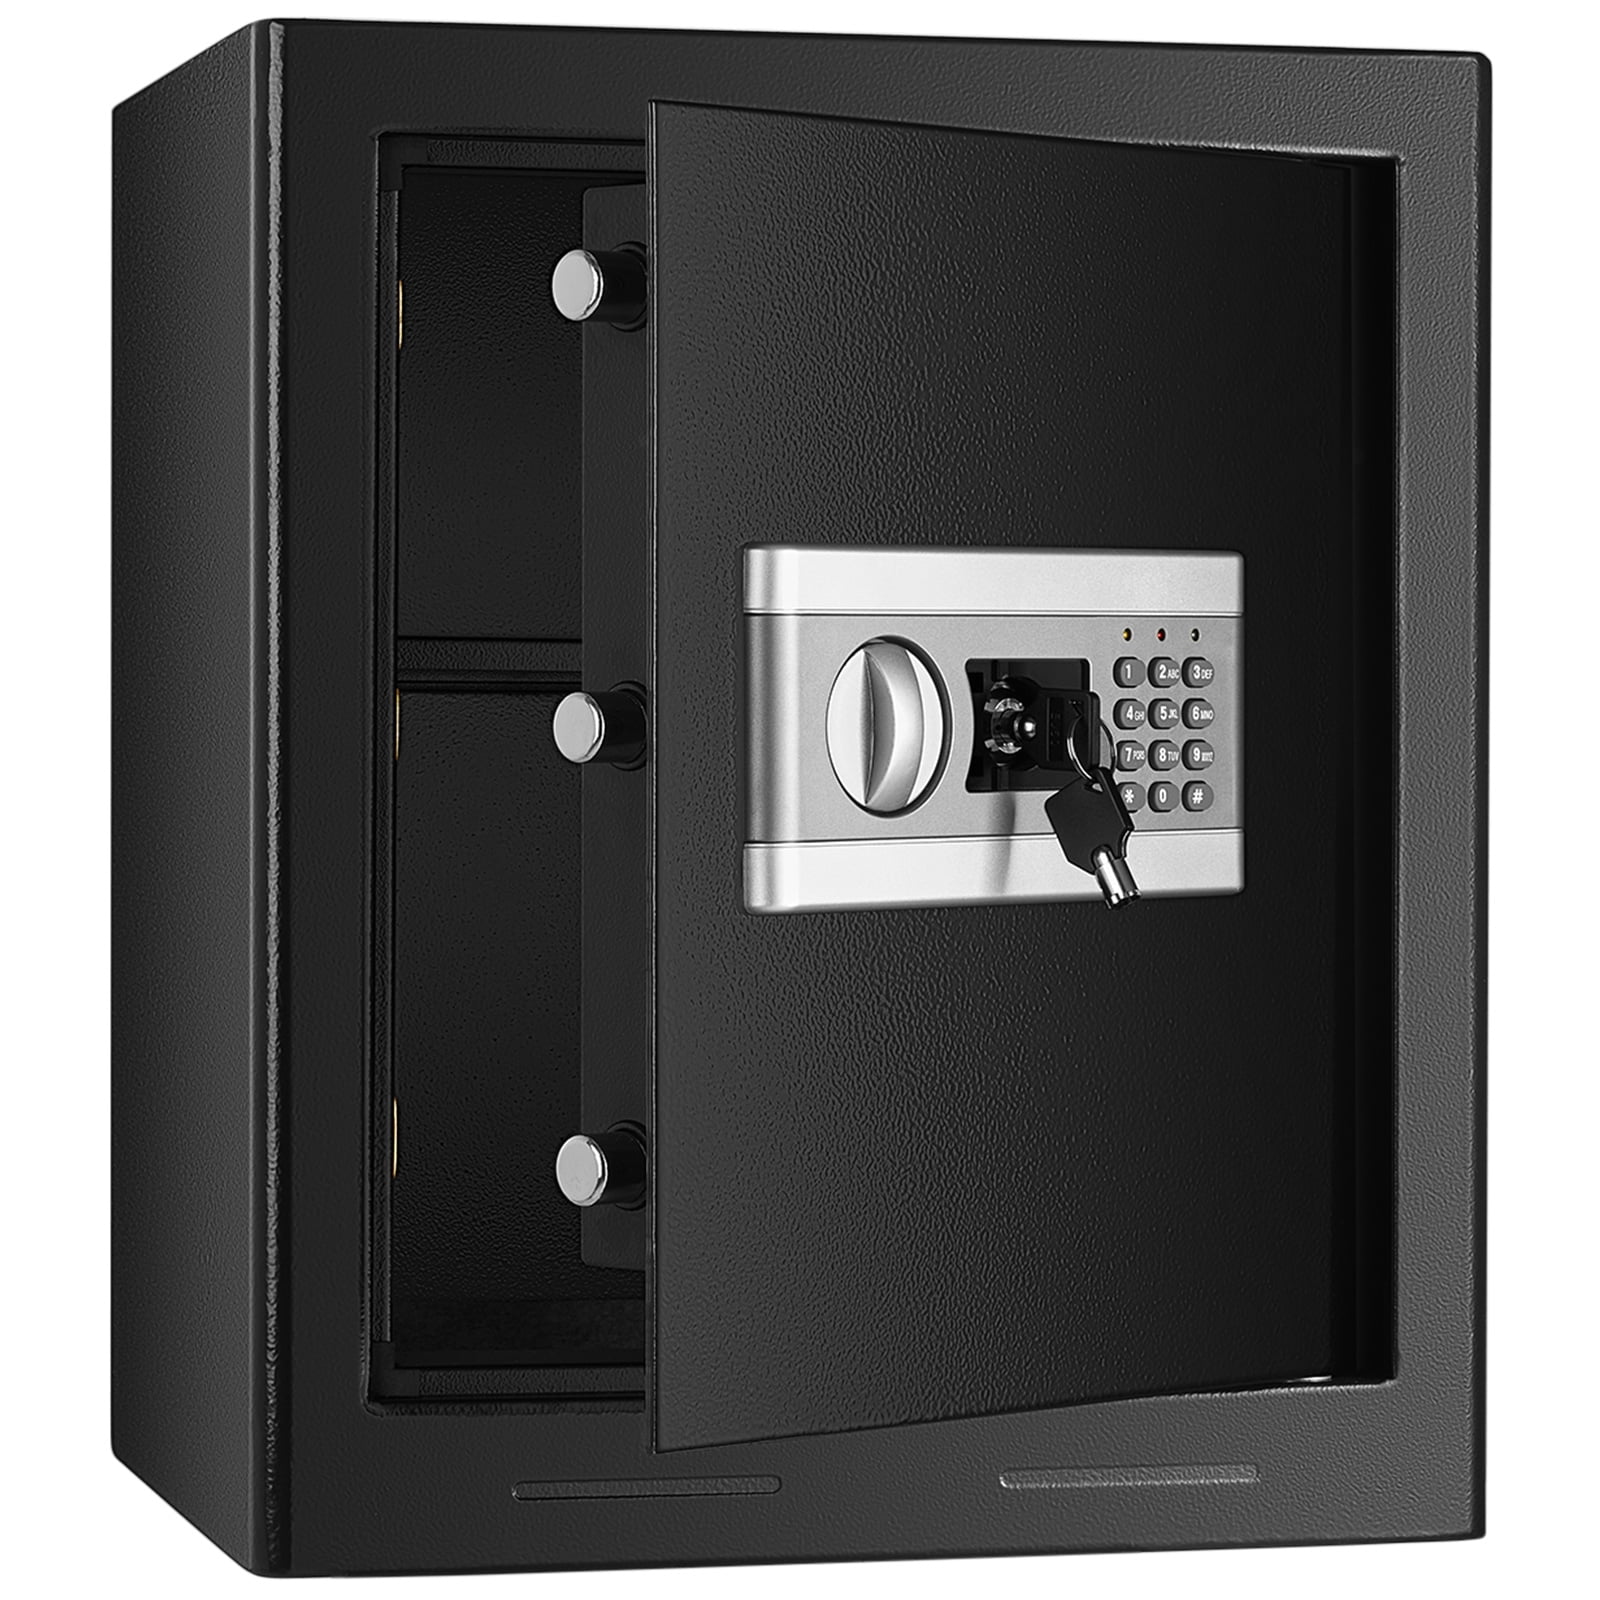 Safe Box for Money Cash Jewelry Guns 1.2, Keypad Lock Security Safe with Digital Combination Lock Keypad LED Indicator Fireproof Safe Box for Home